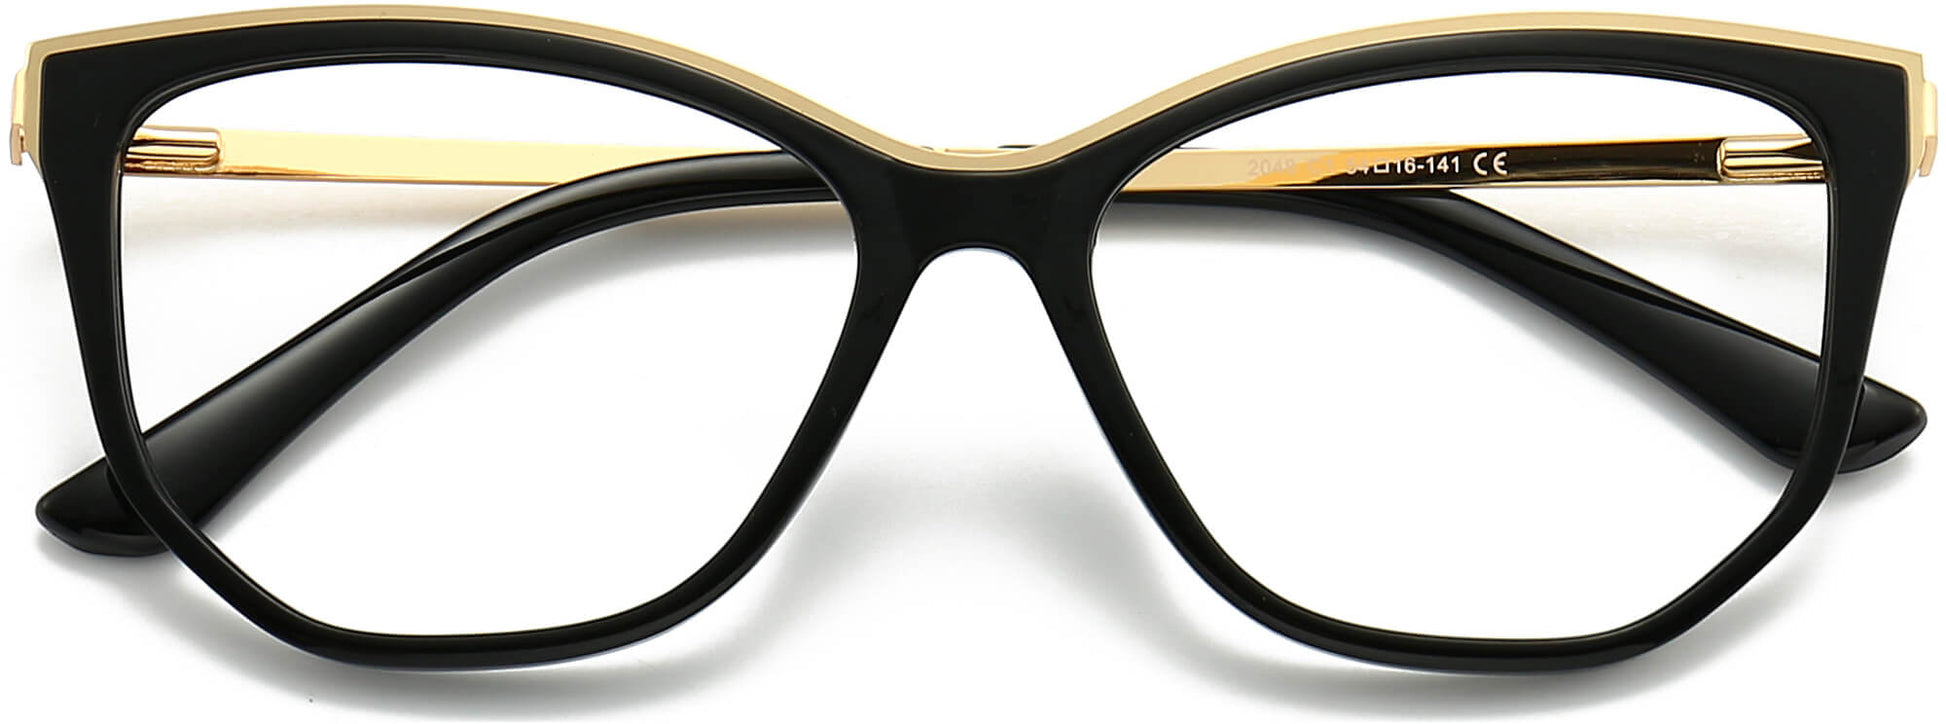 Maya Cateye Black Eyeglasses from ANRRI, closed view